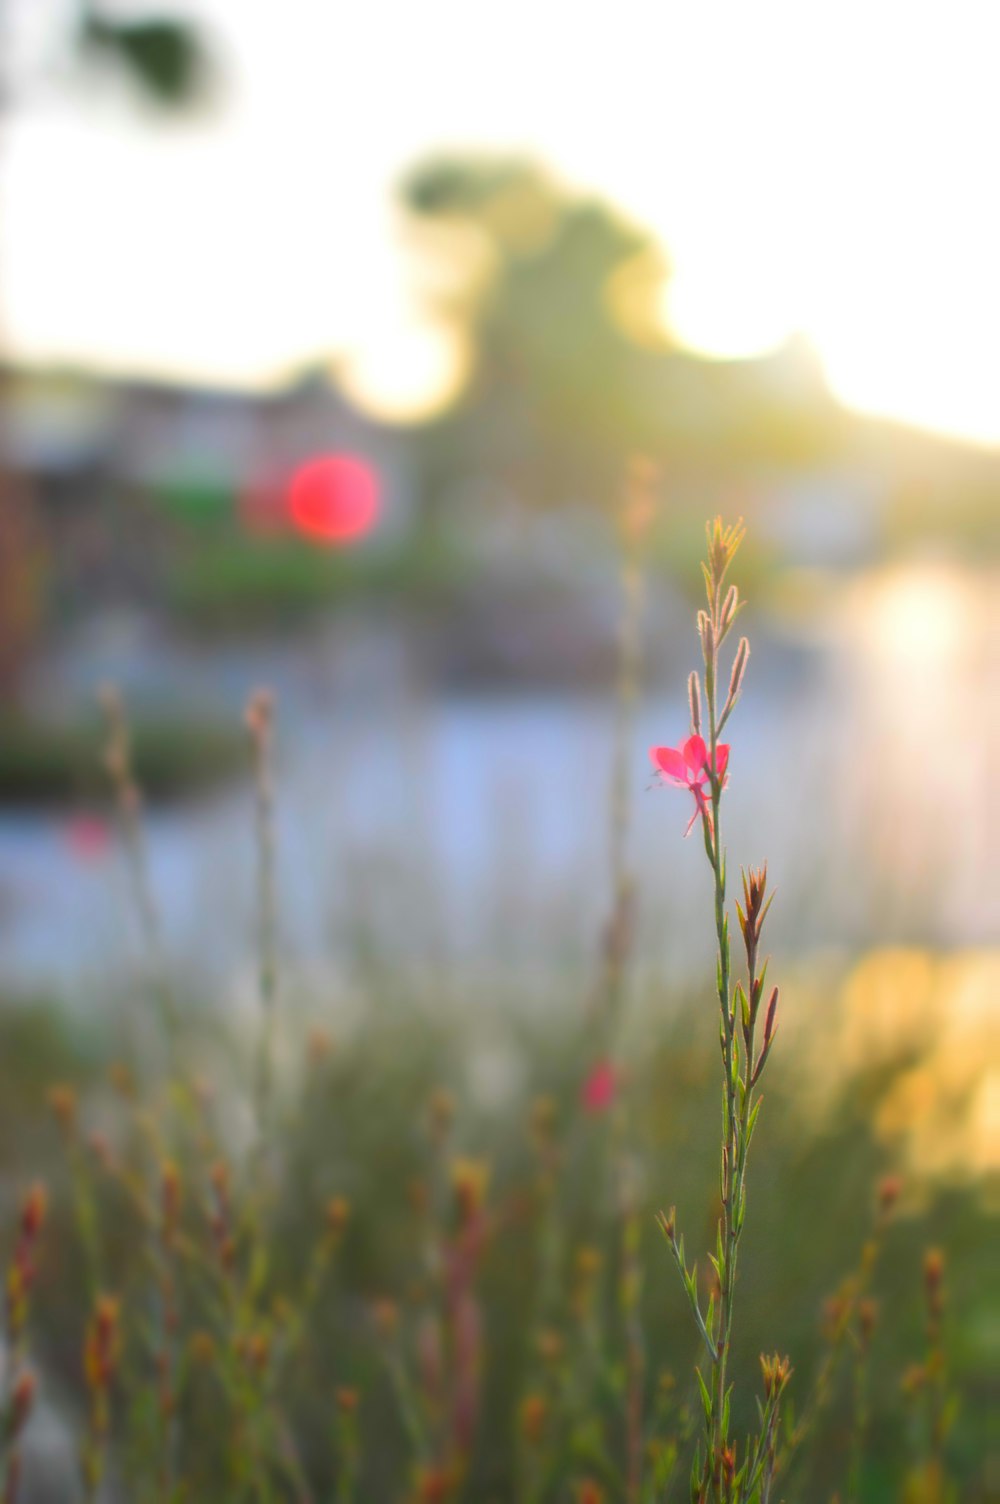 Light Flower Pictures | Download Free Images on Unsplash